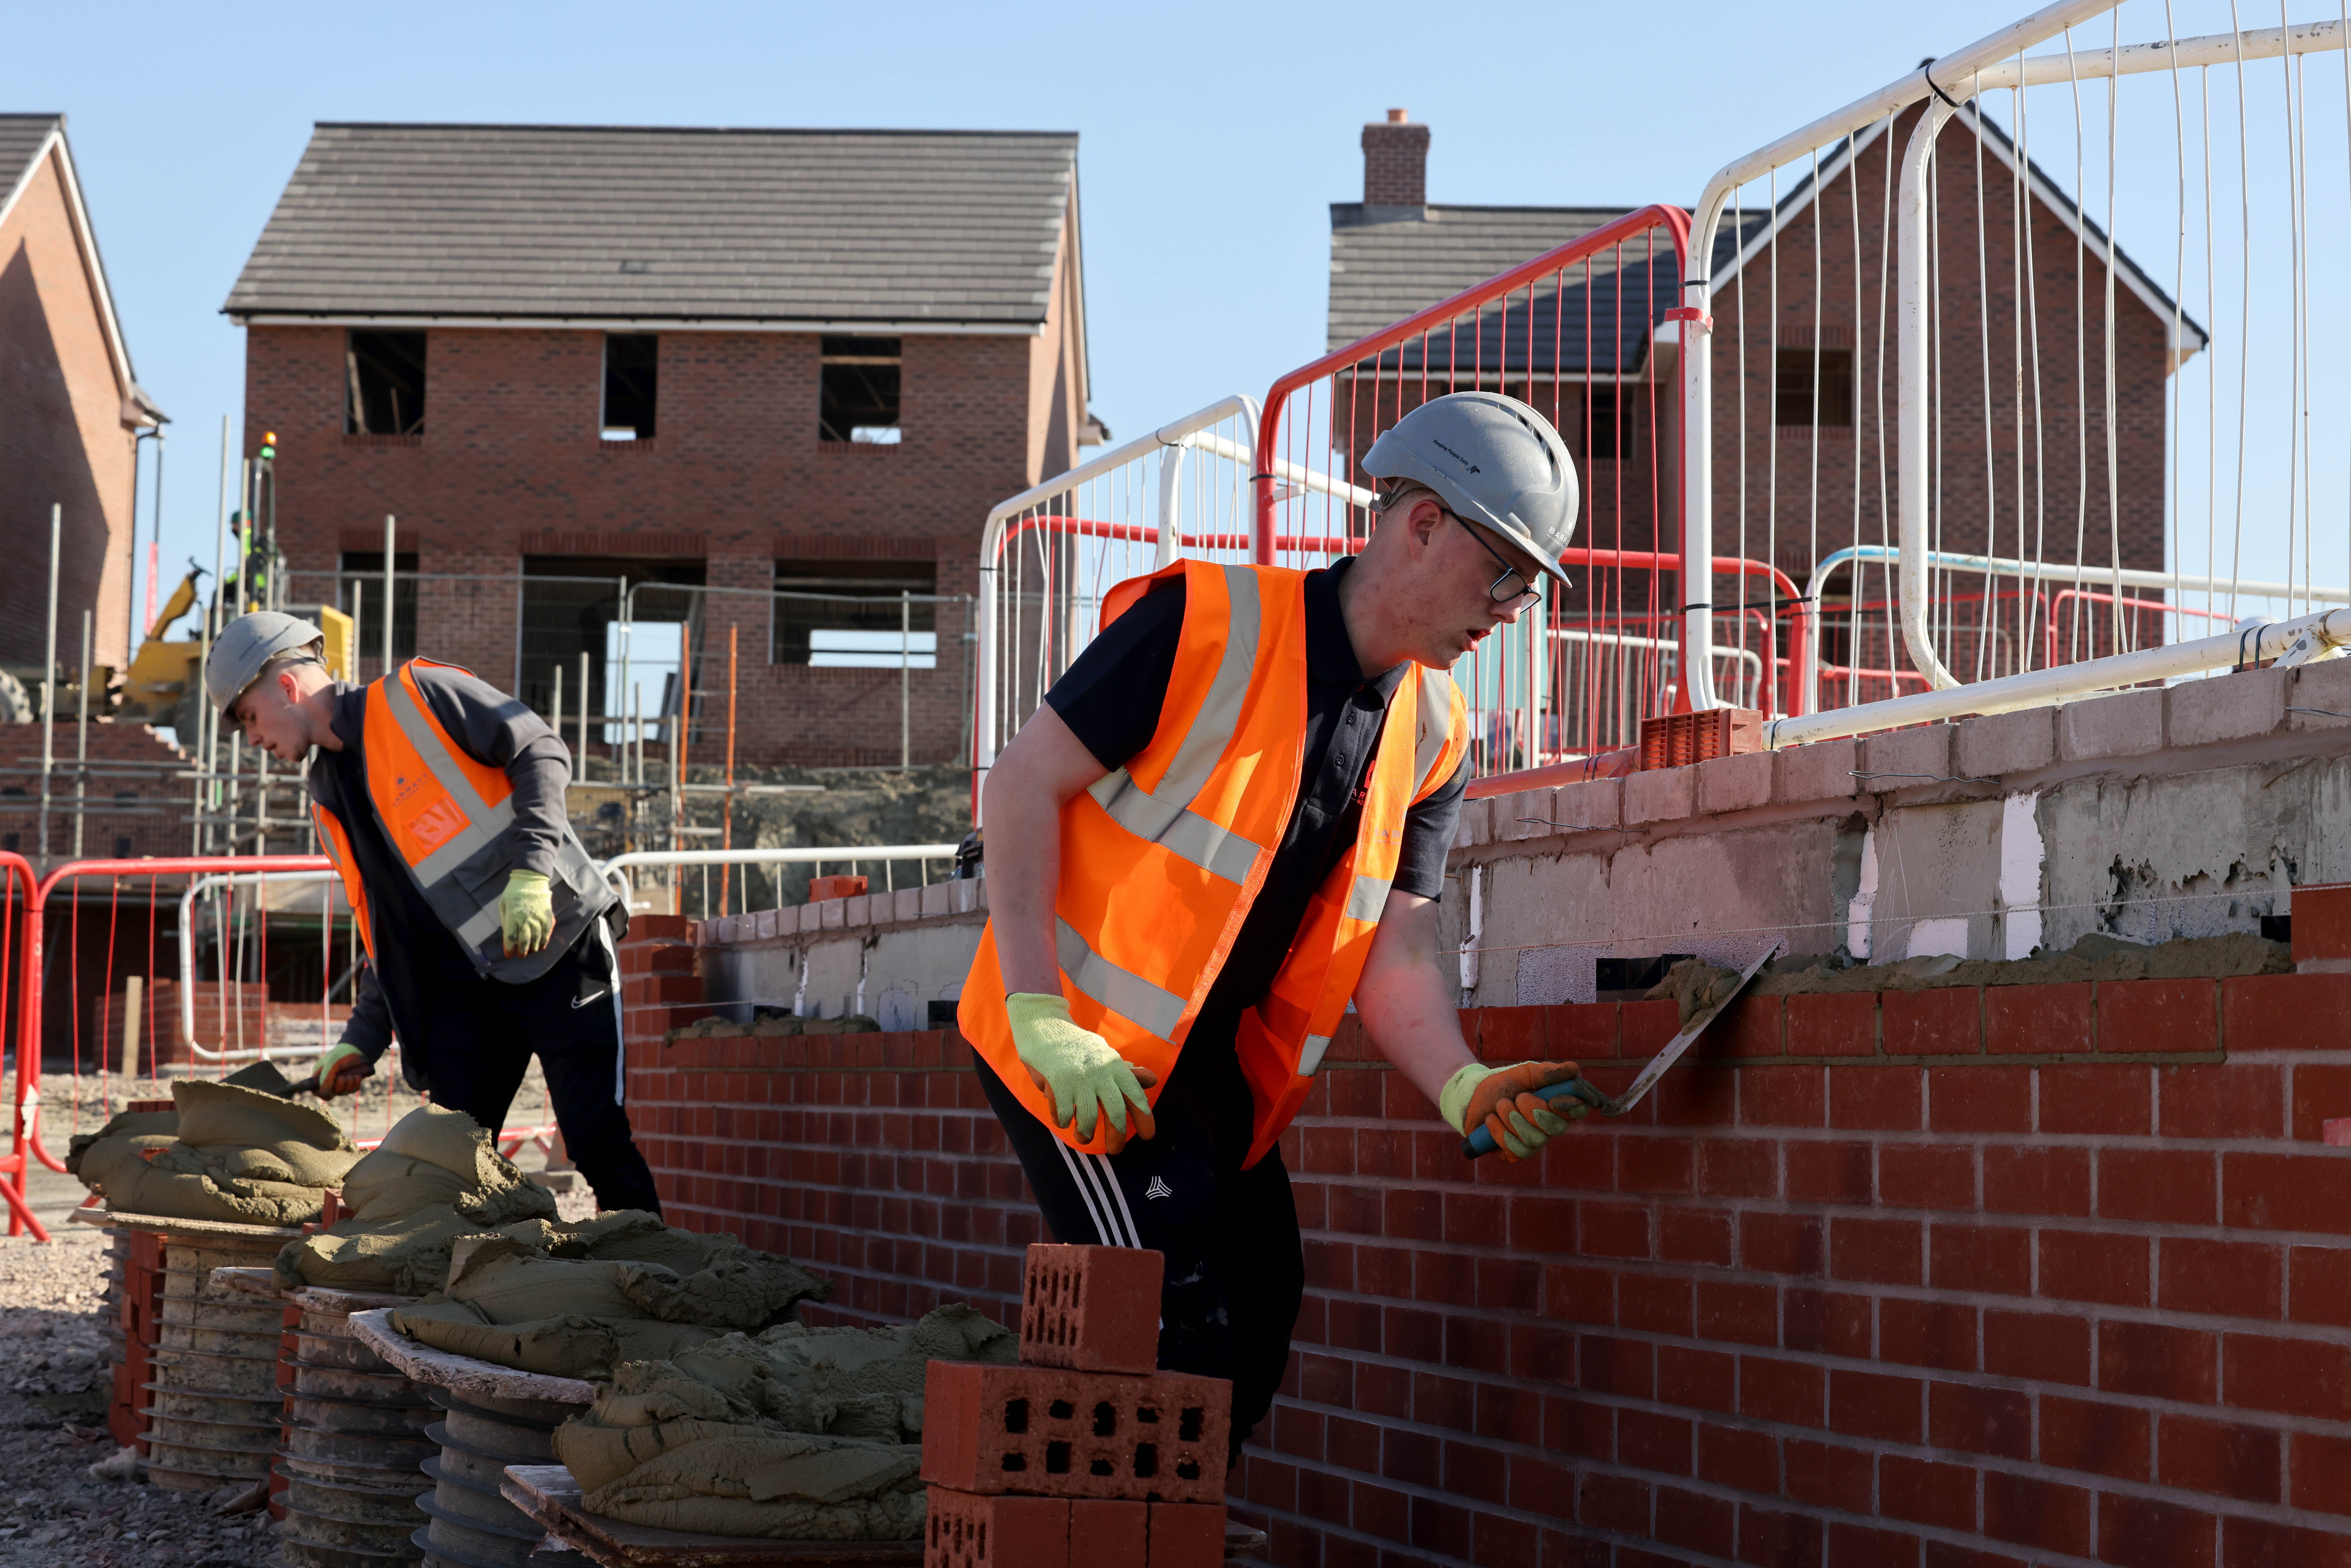 Bricklayers at work on a Barratt Homes development site (Jonathan Buckmaster/Daily Express/PA)